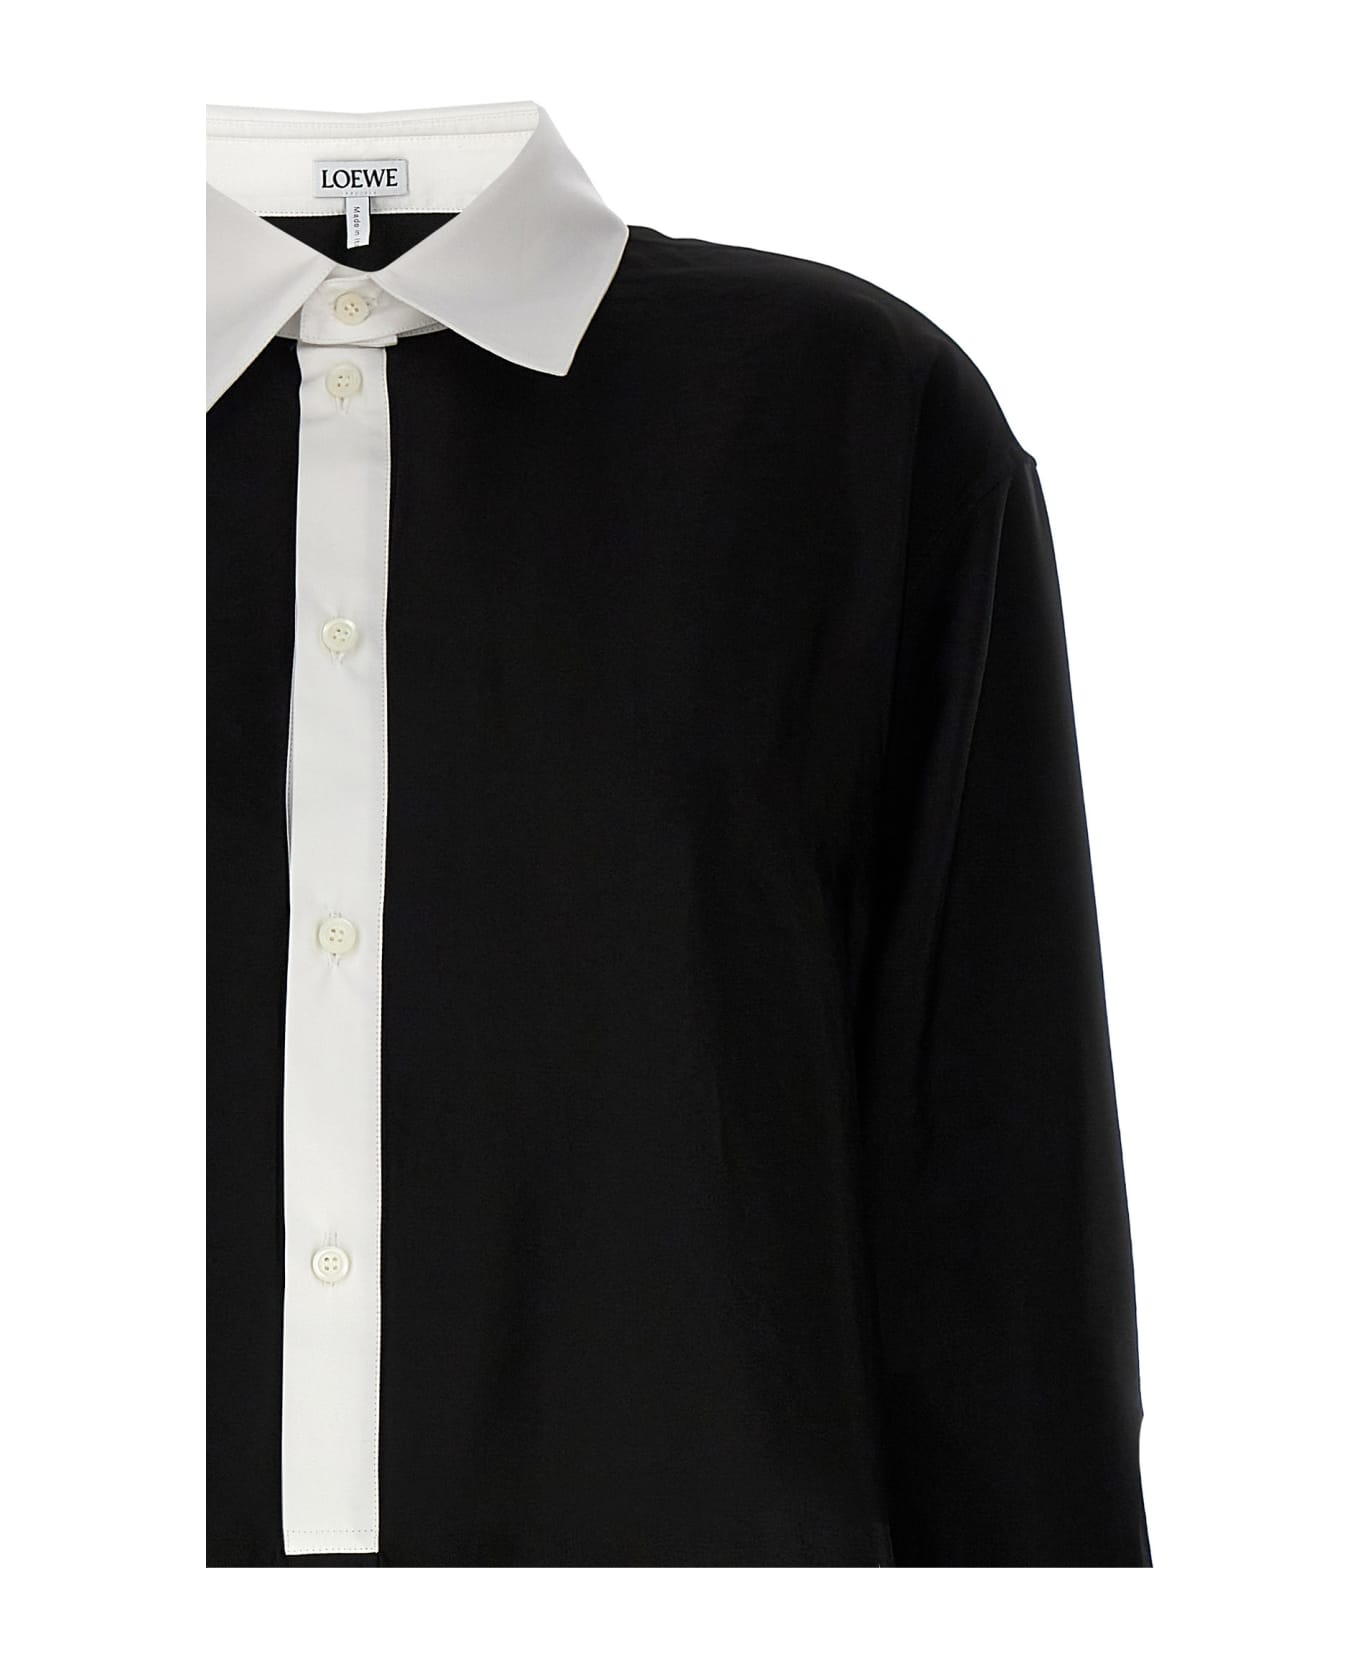 Loewe Shirt Dress - Black  